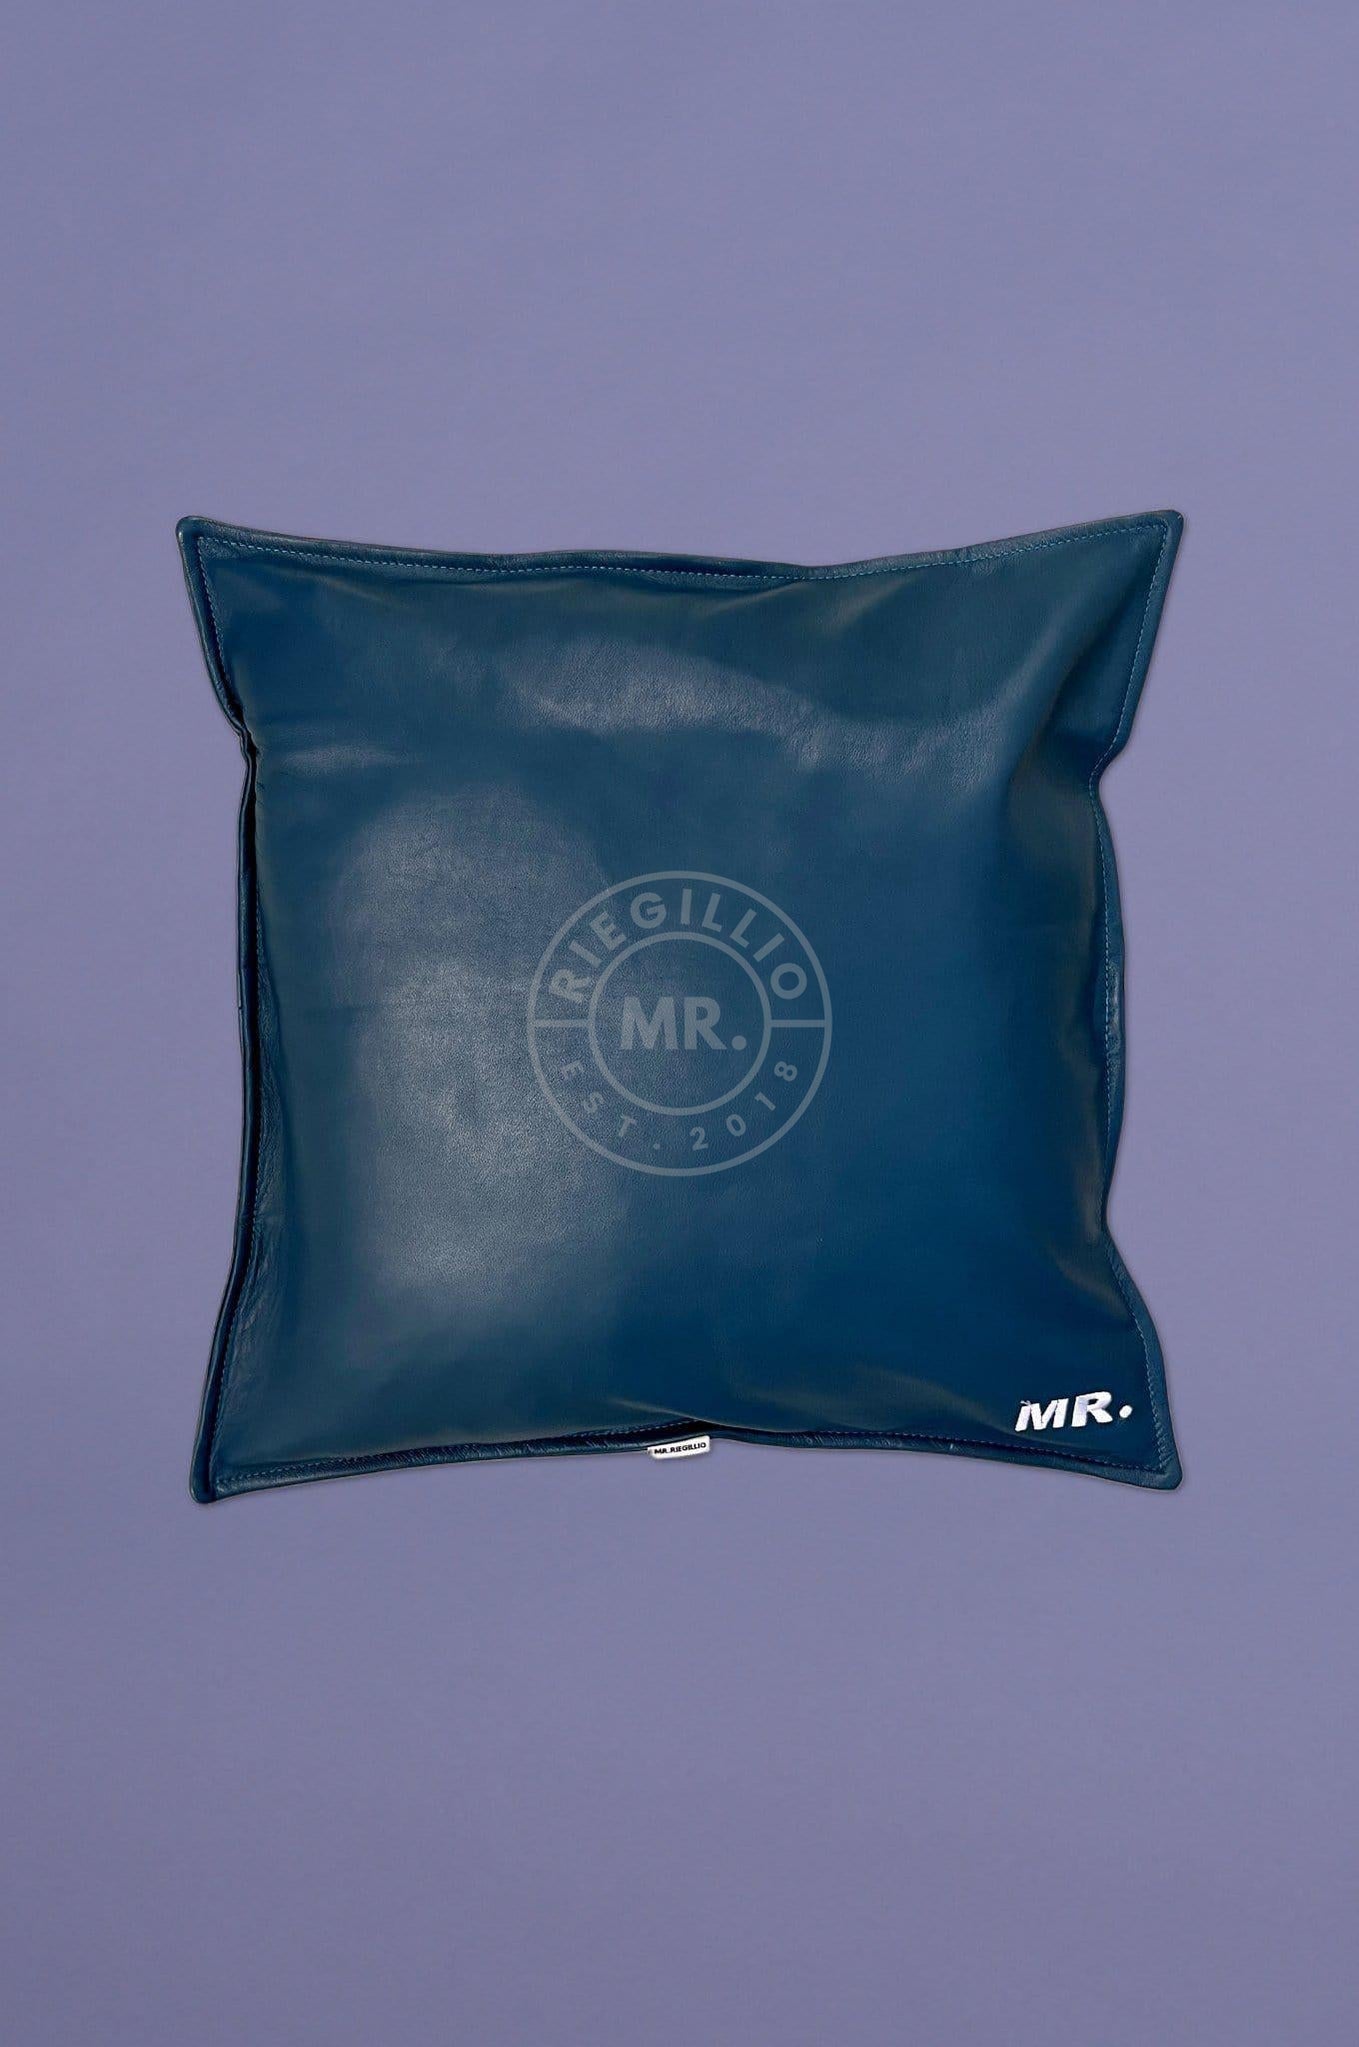 Jeans Blue Leather Pillow at MR. Riegillio